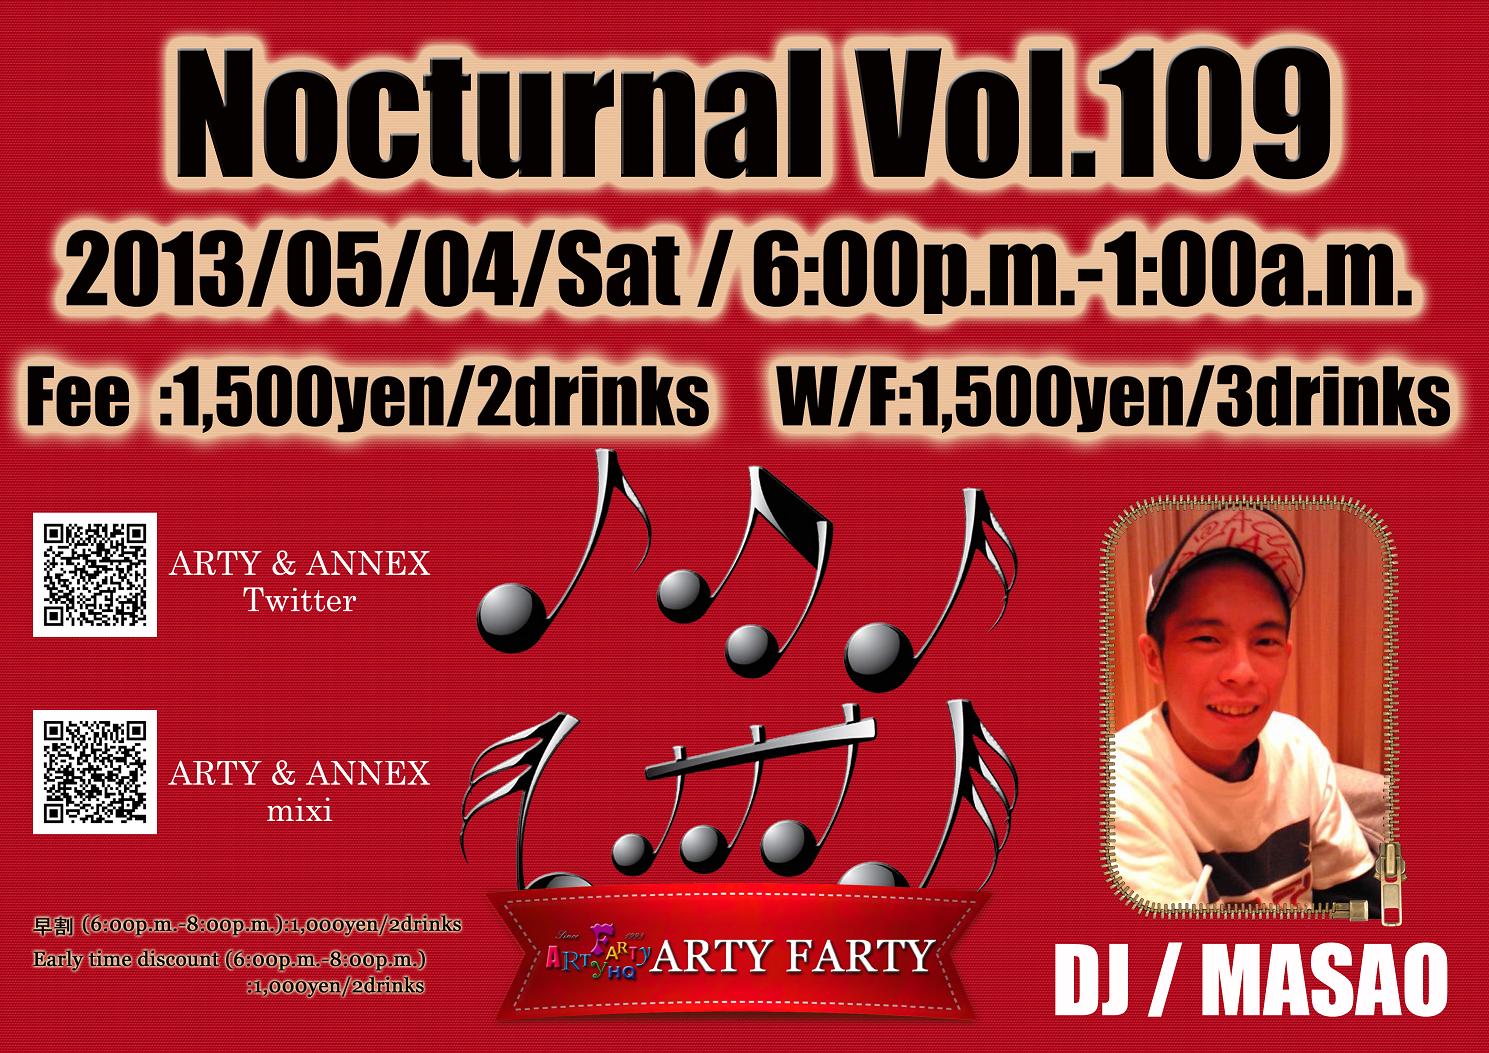 Nocturnal Vol.109   2013/05/04  - 1489x1053 351.9kb